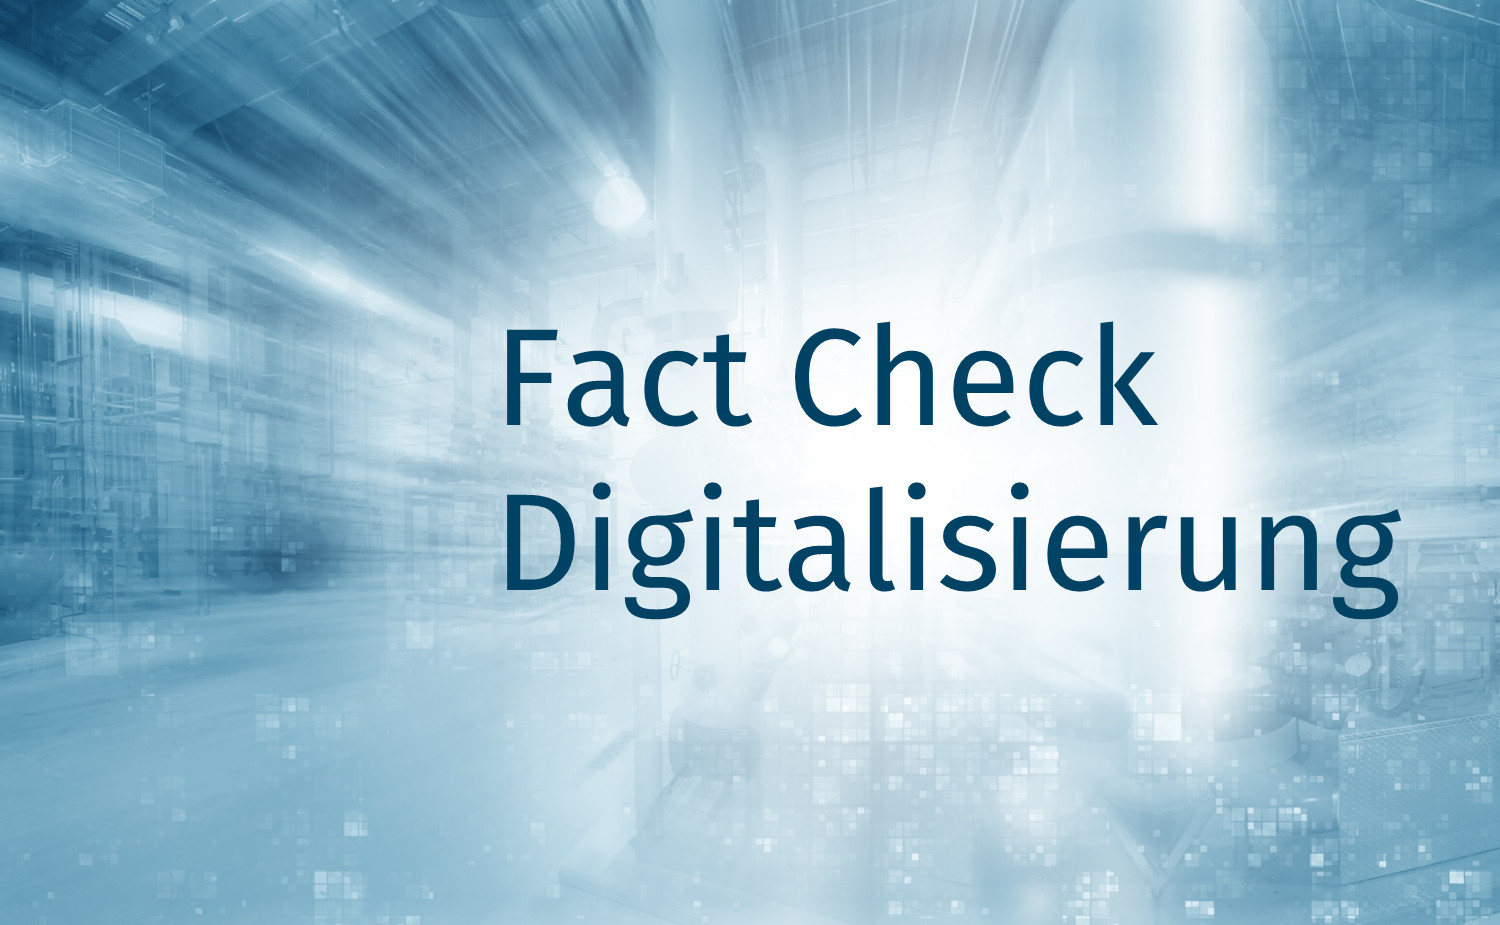 Fact Check Digitalisierung 2017